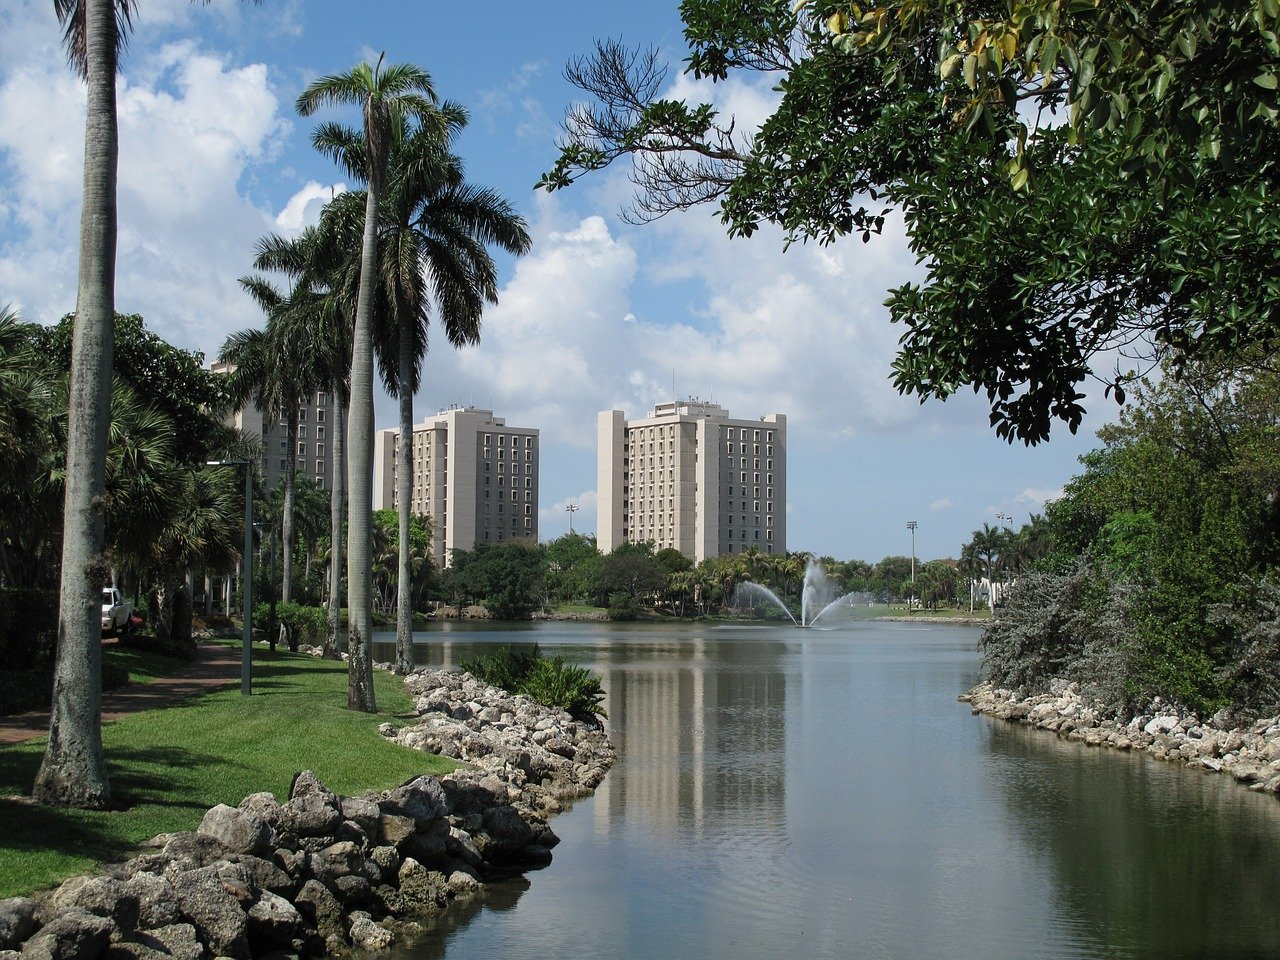 The University of Miami,